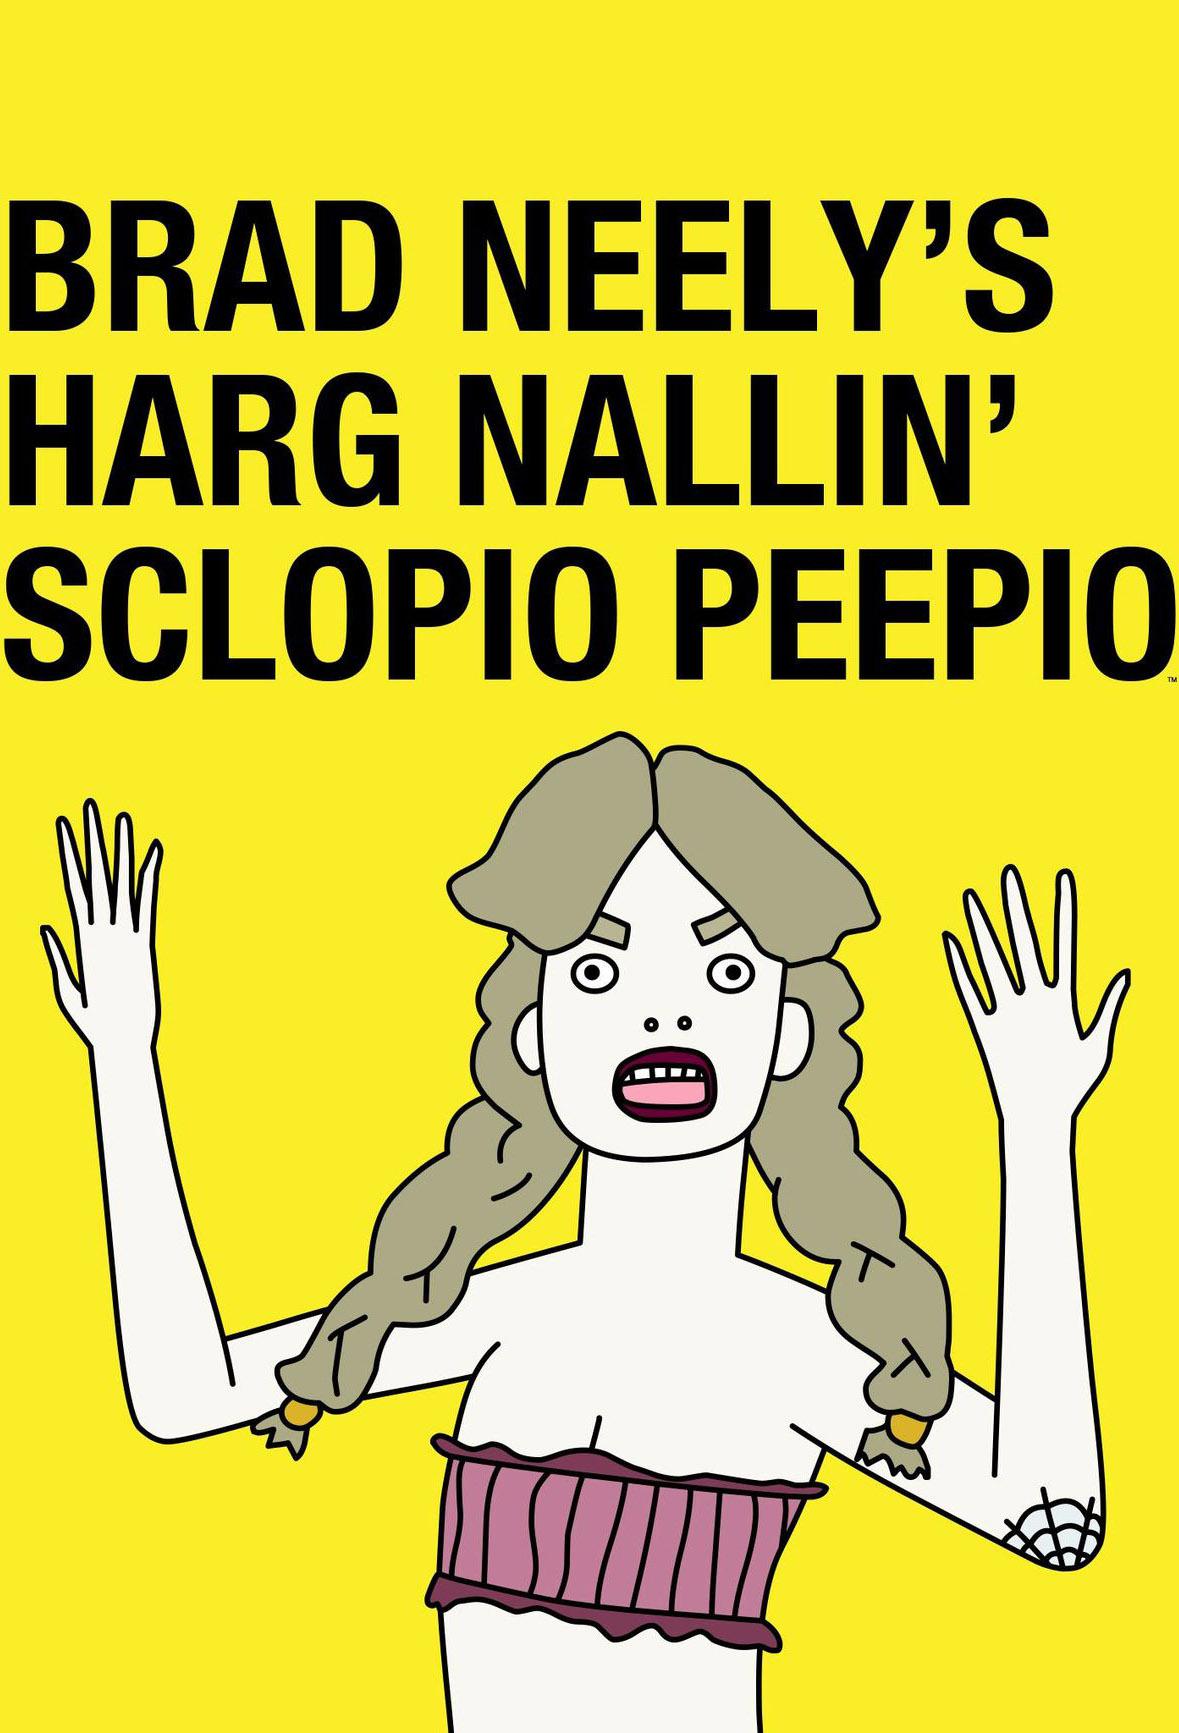 TV ratings for Brad Neely's Harg Nallin' Sclopio Peepio in Japan. Adult Swim TV series